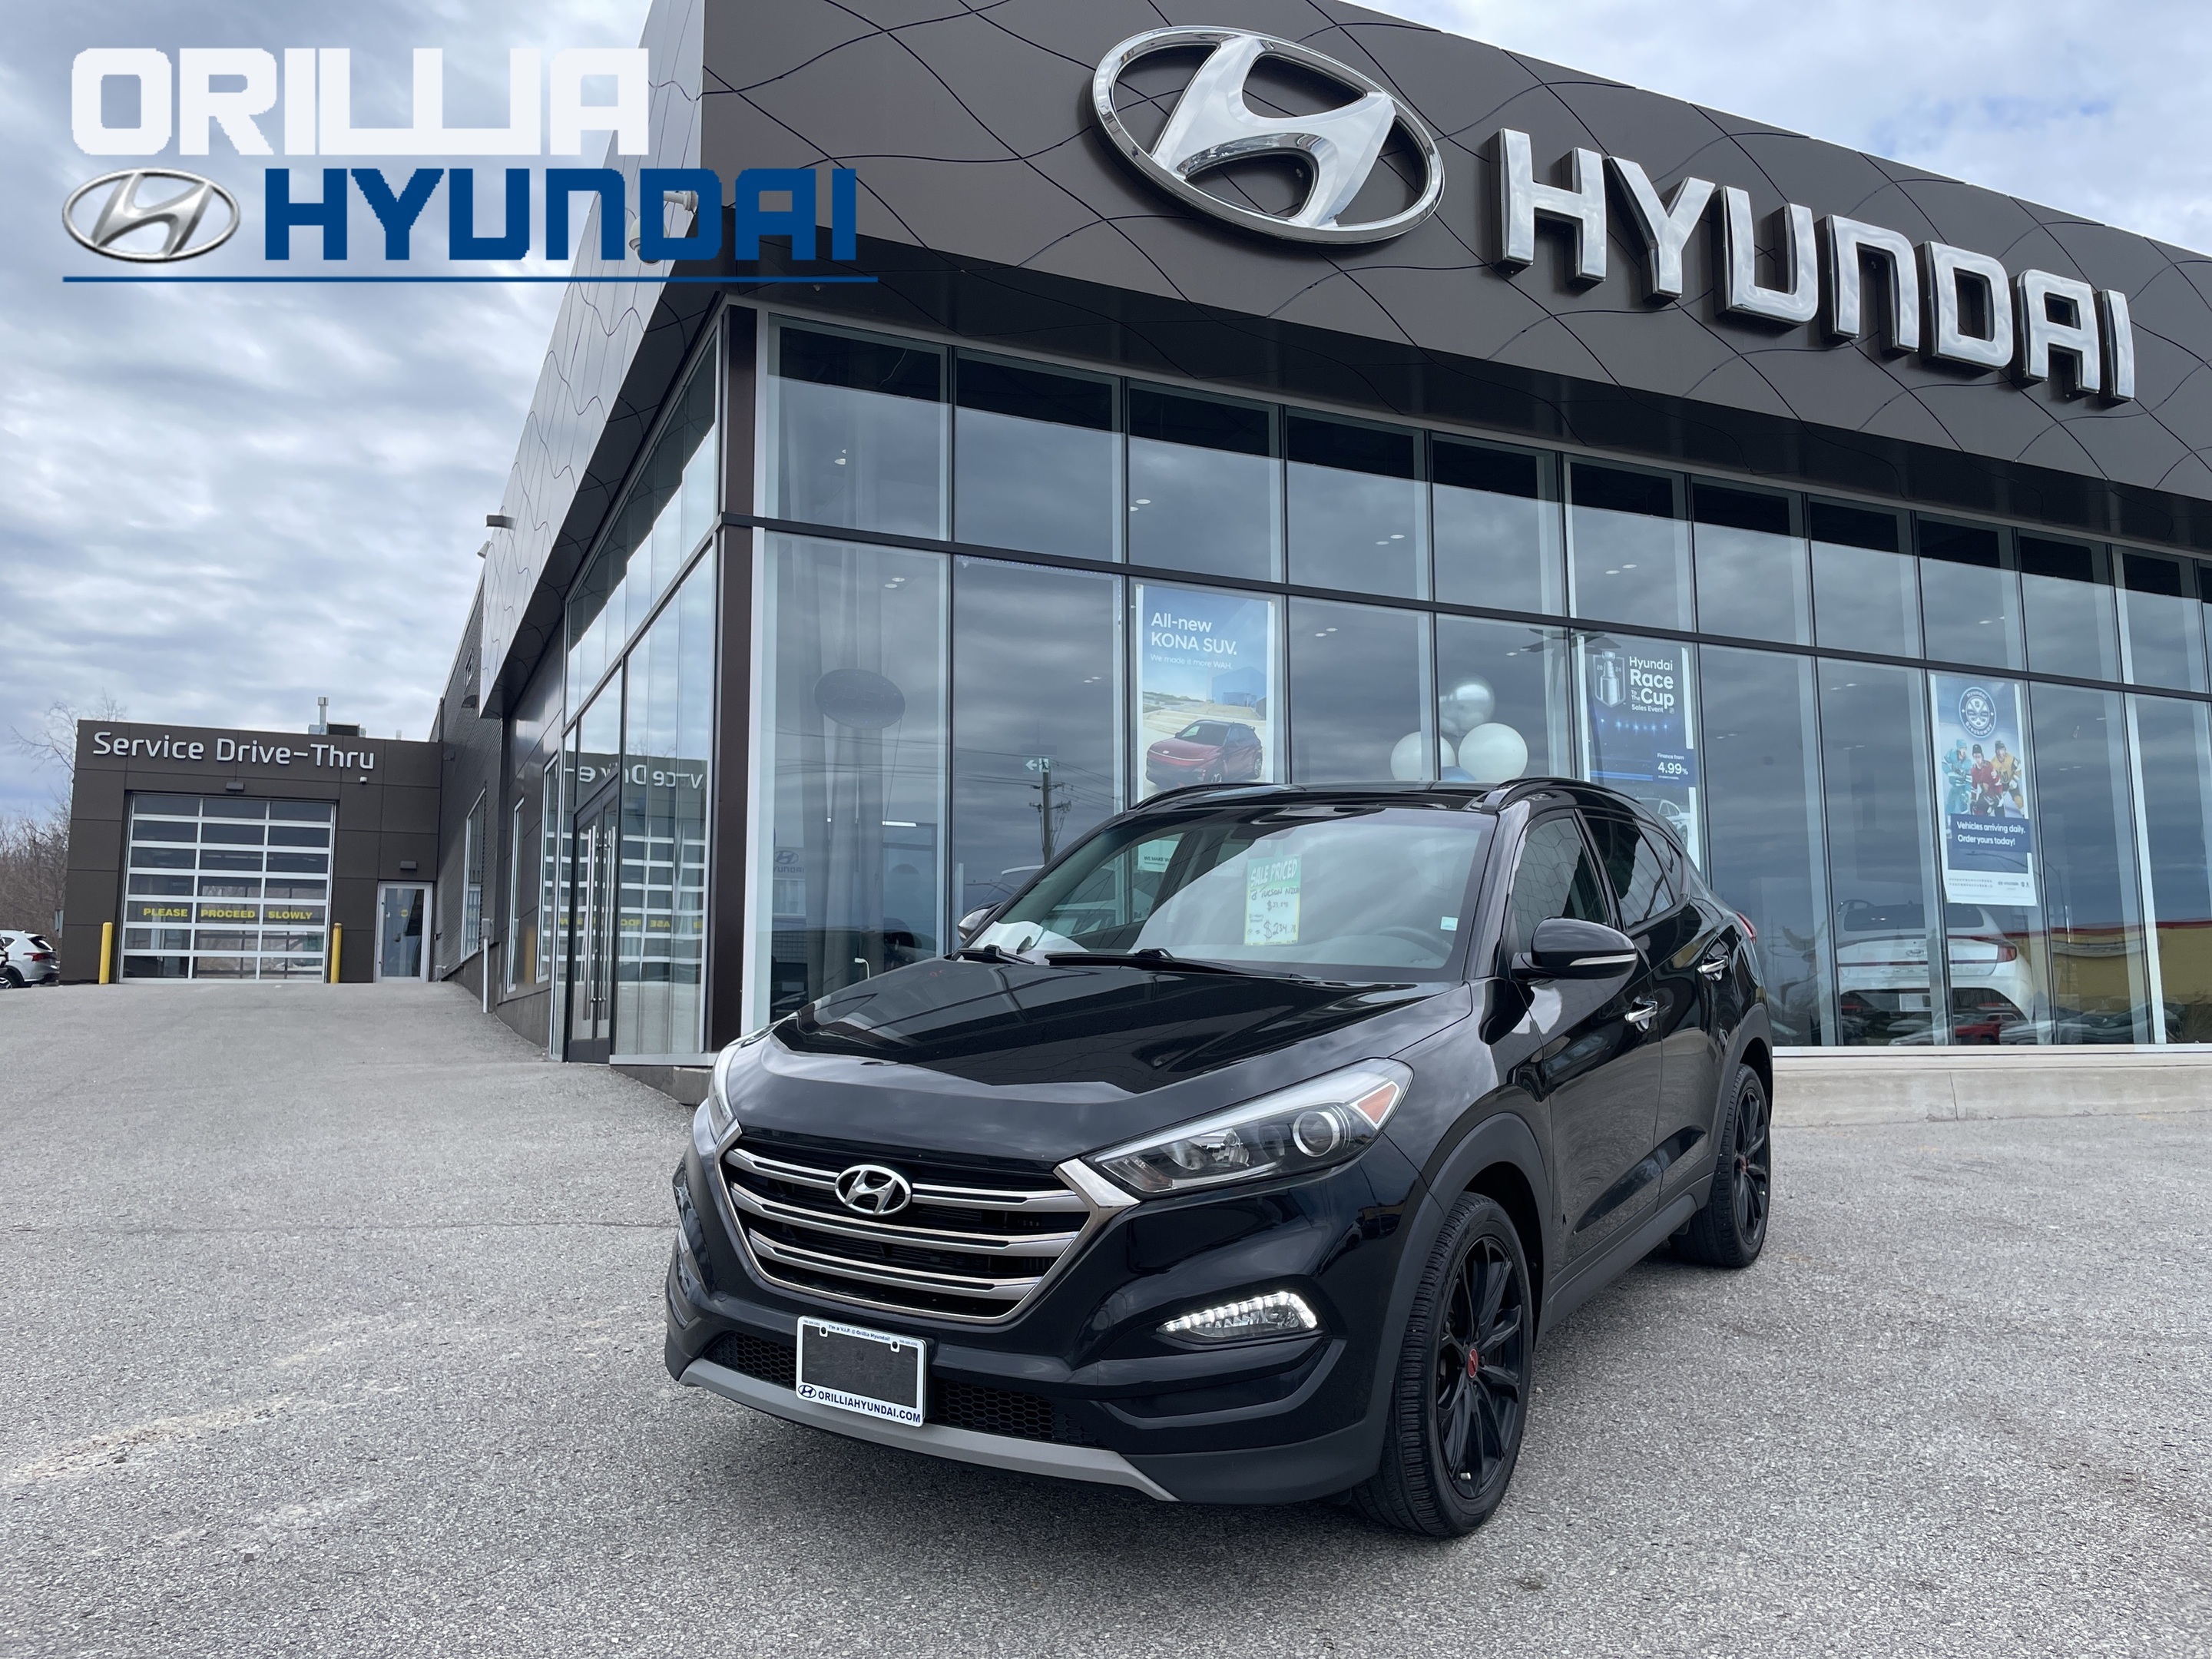 2018 Hyundai Tucson 1.6T Noir AWD | PANO ROOF | SPORT RIMS |